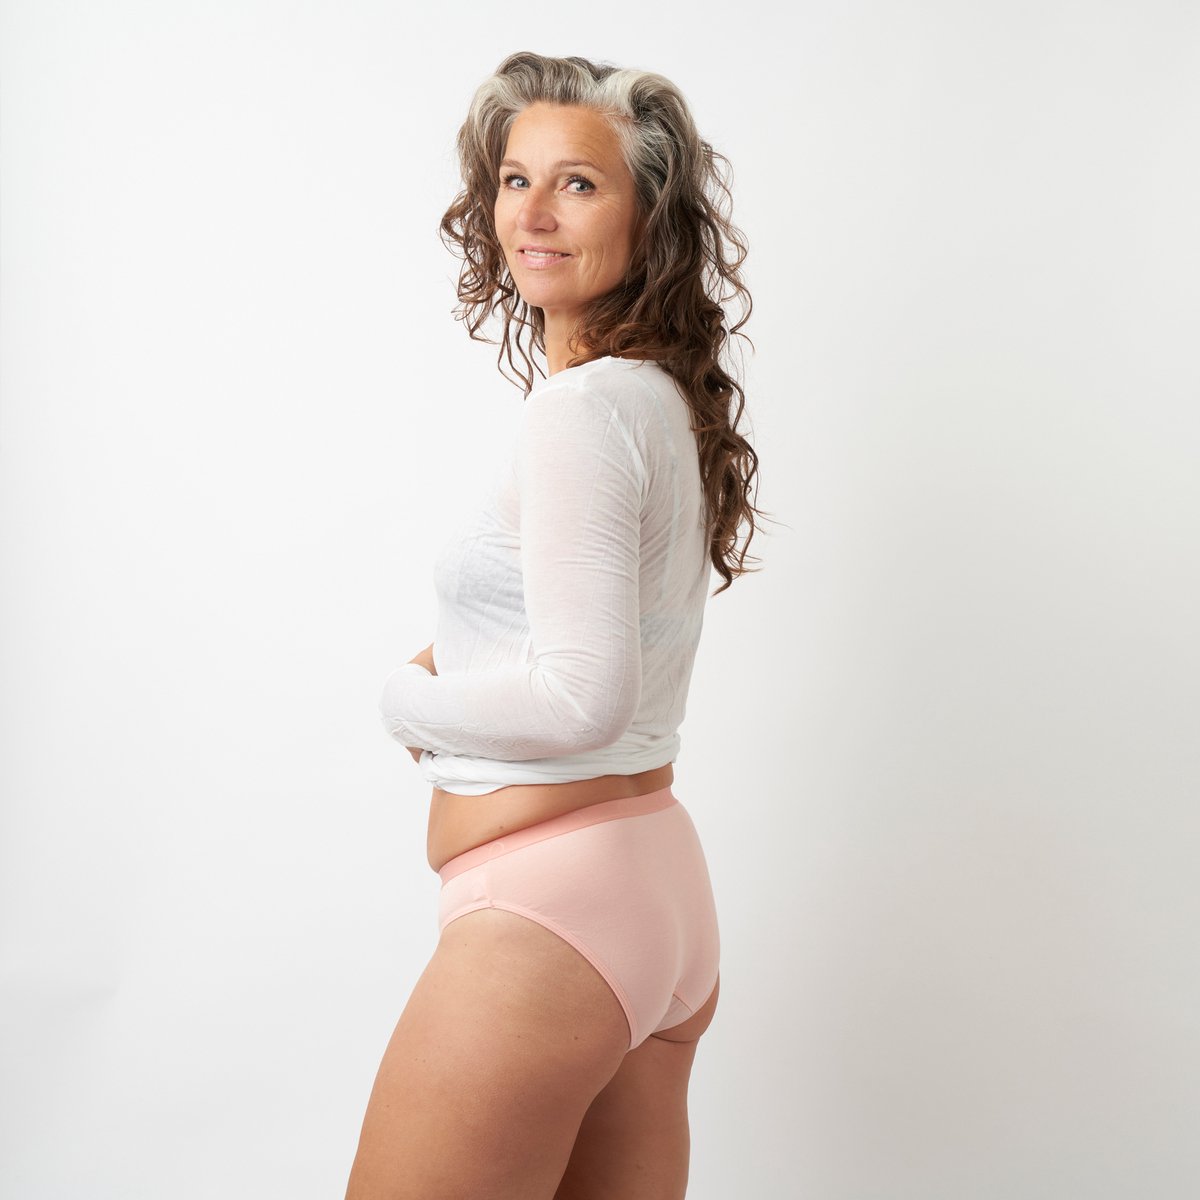 Moodies Undies menstruatie & incontinentie ondergoed - Bamboe Bikini model Broekje - light kruisje - Roze - maat M